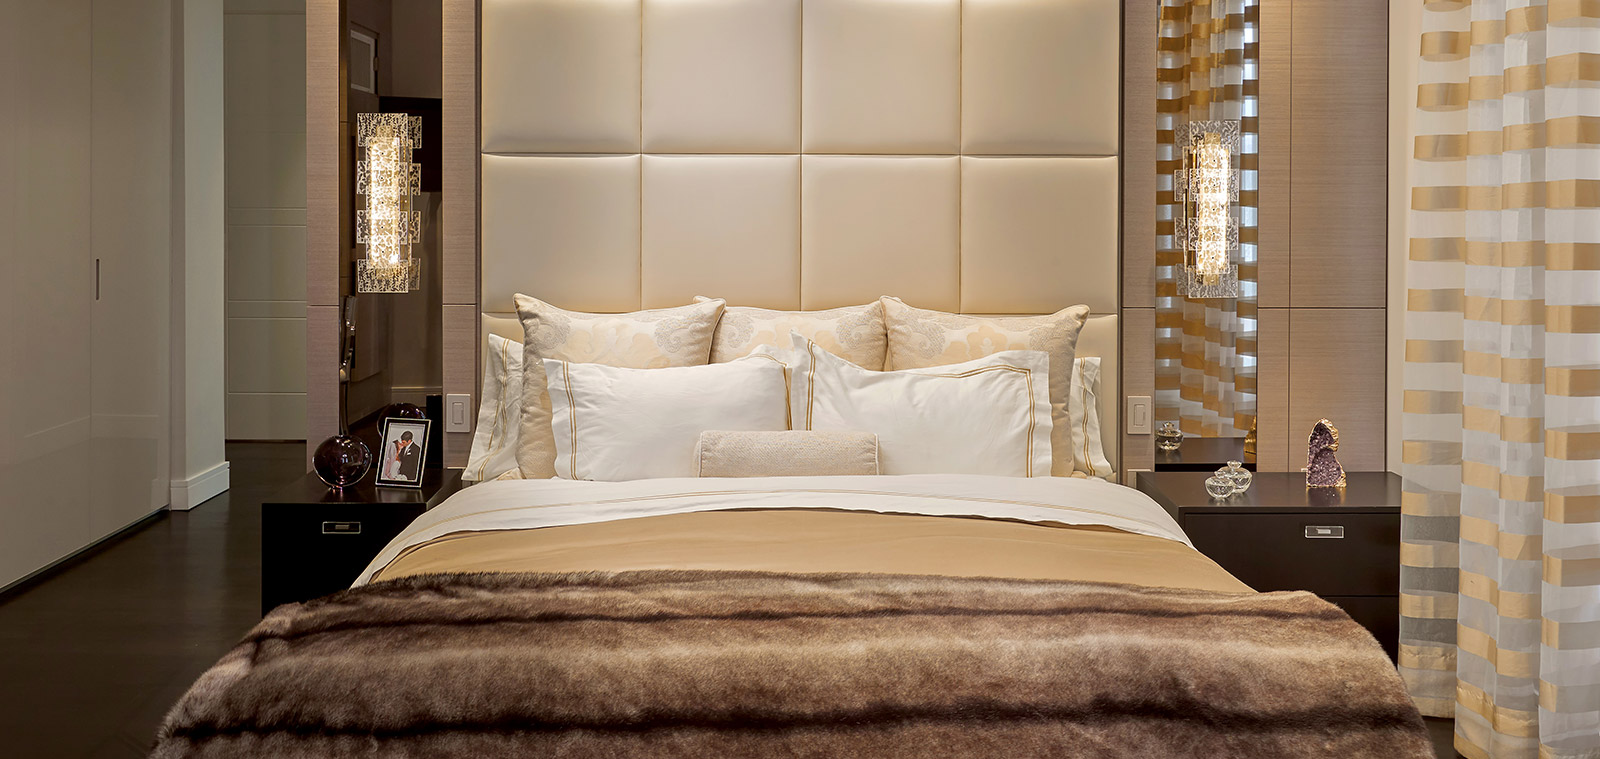 Luxurious Master Bedroom Design